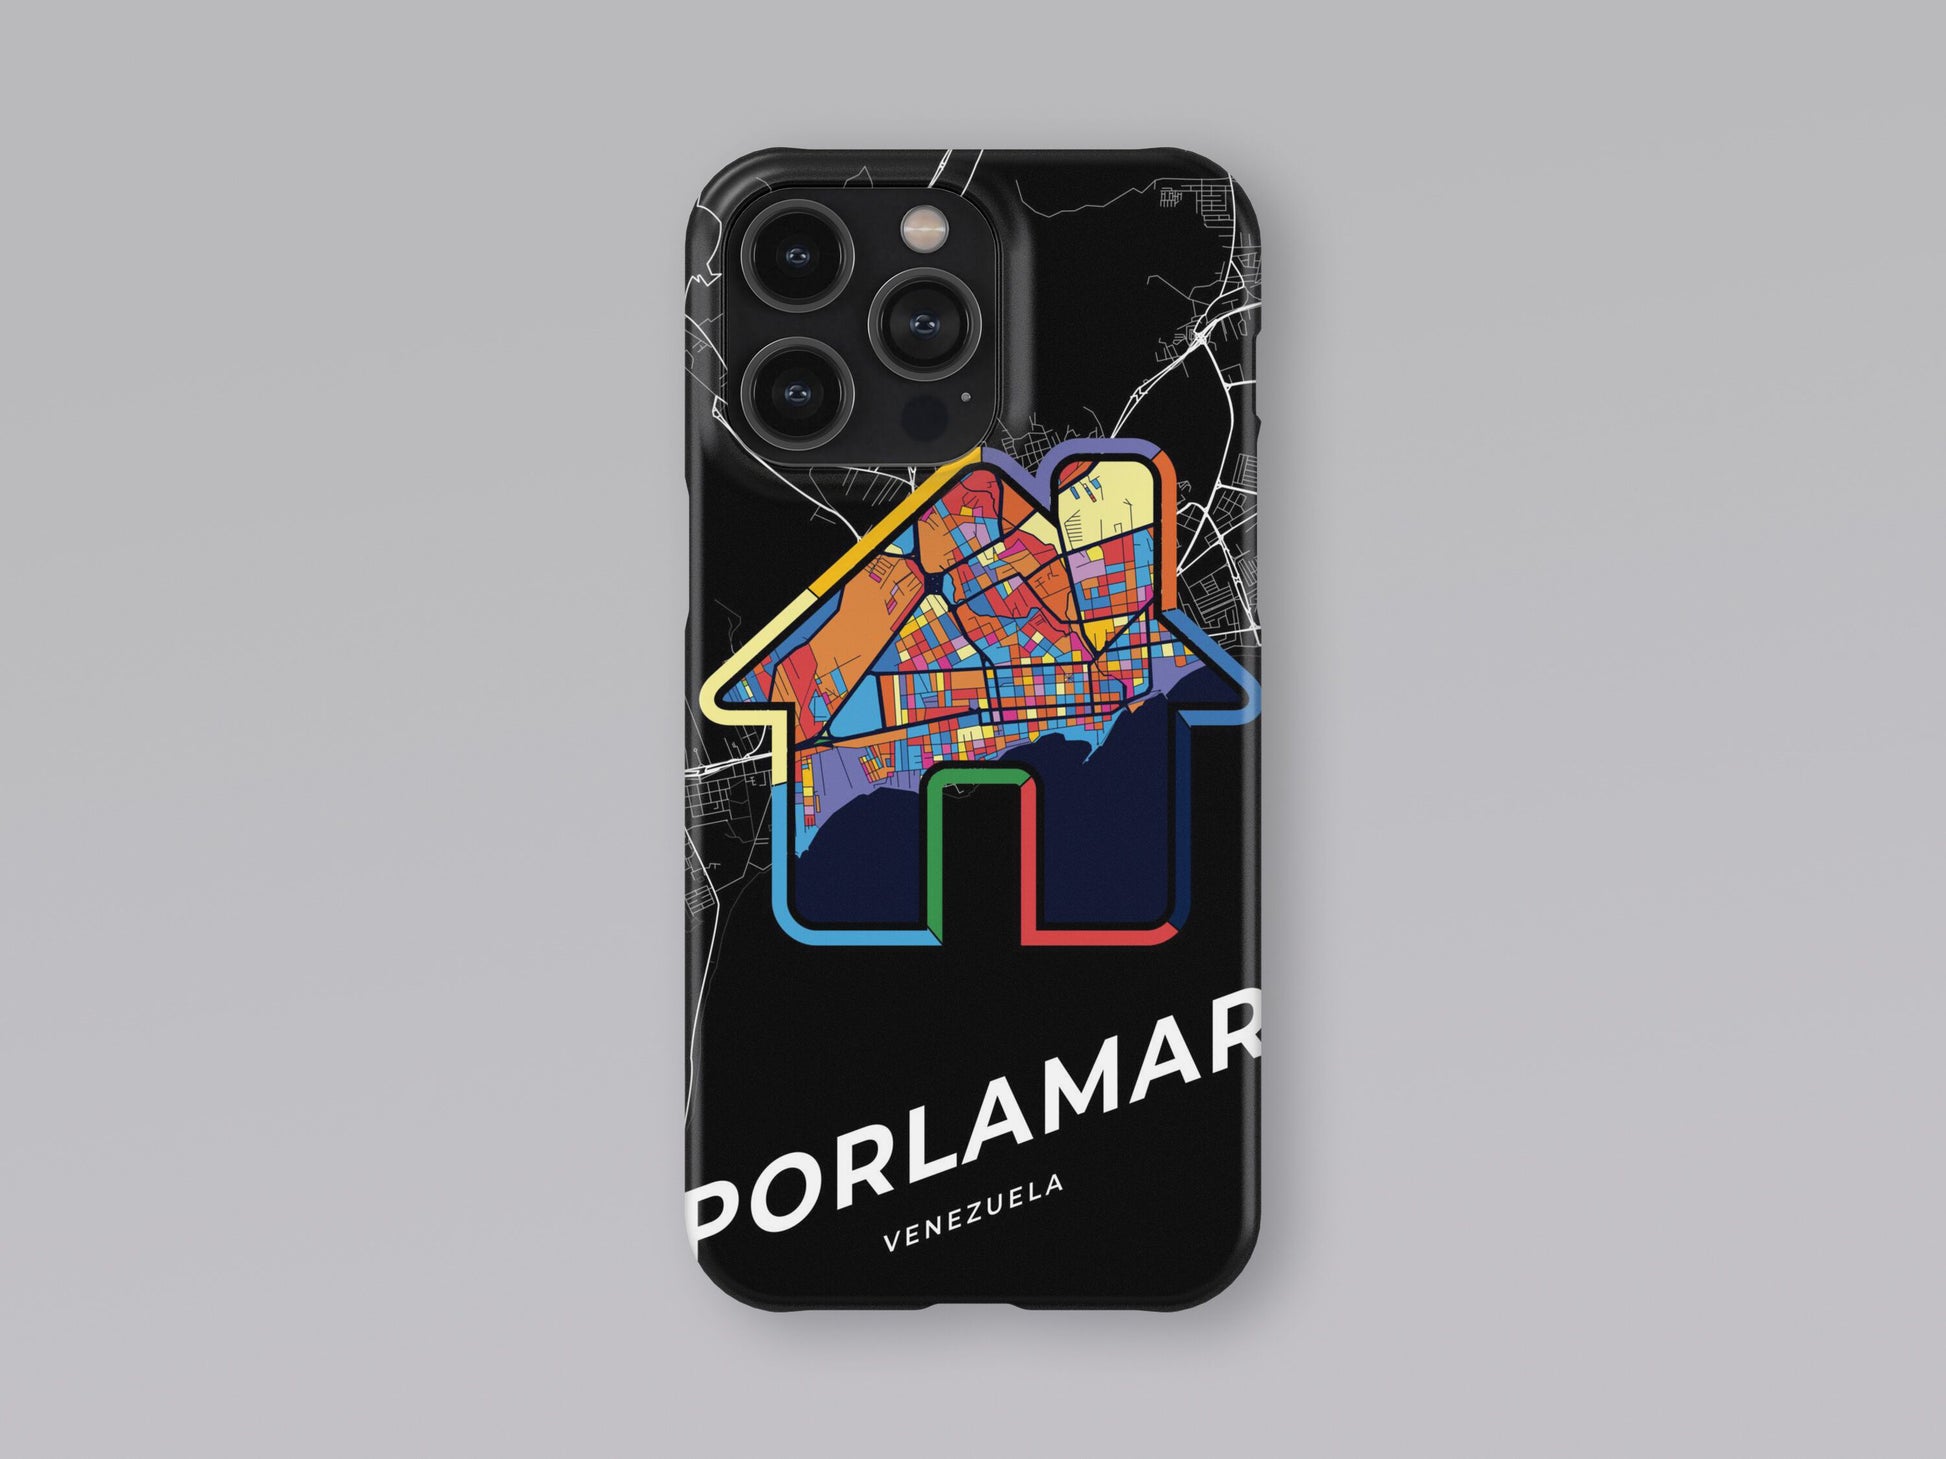 Porlamar Venezuela slim phone case with colorful icon 3